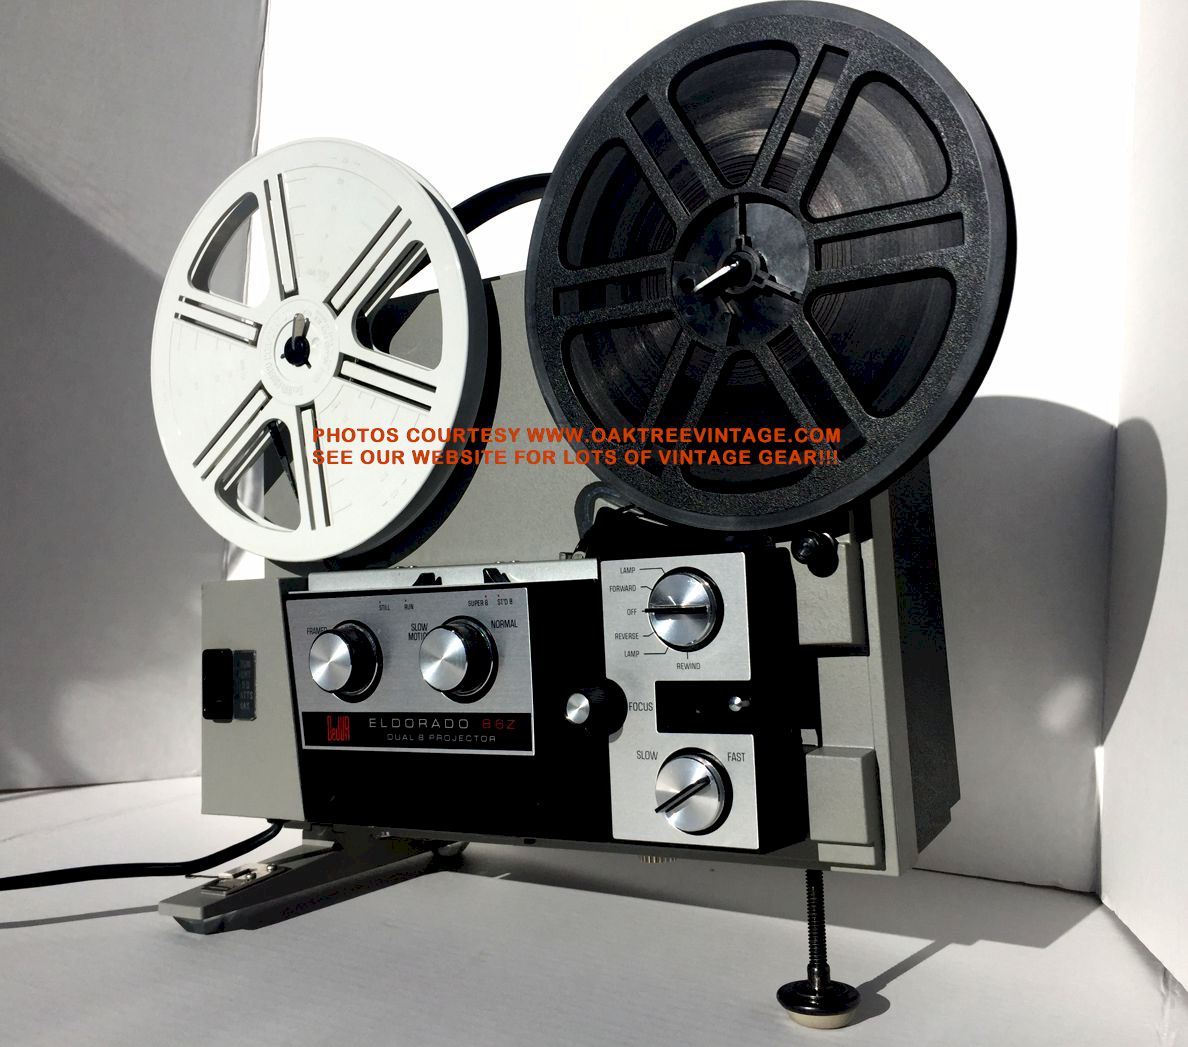 8mm & Super-8 Film projectors reel to reel film / / motion-picture